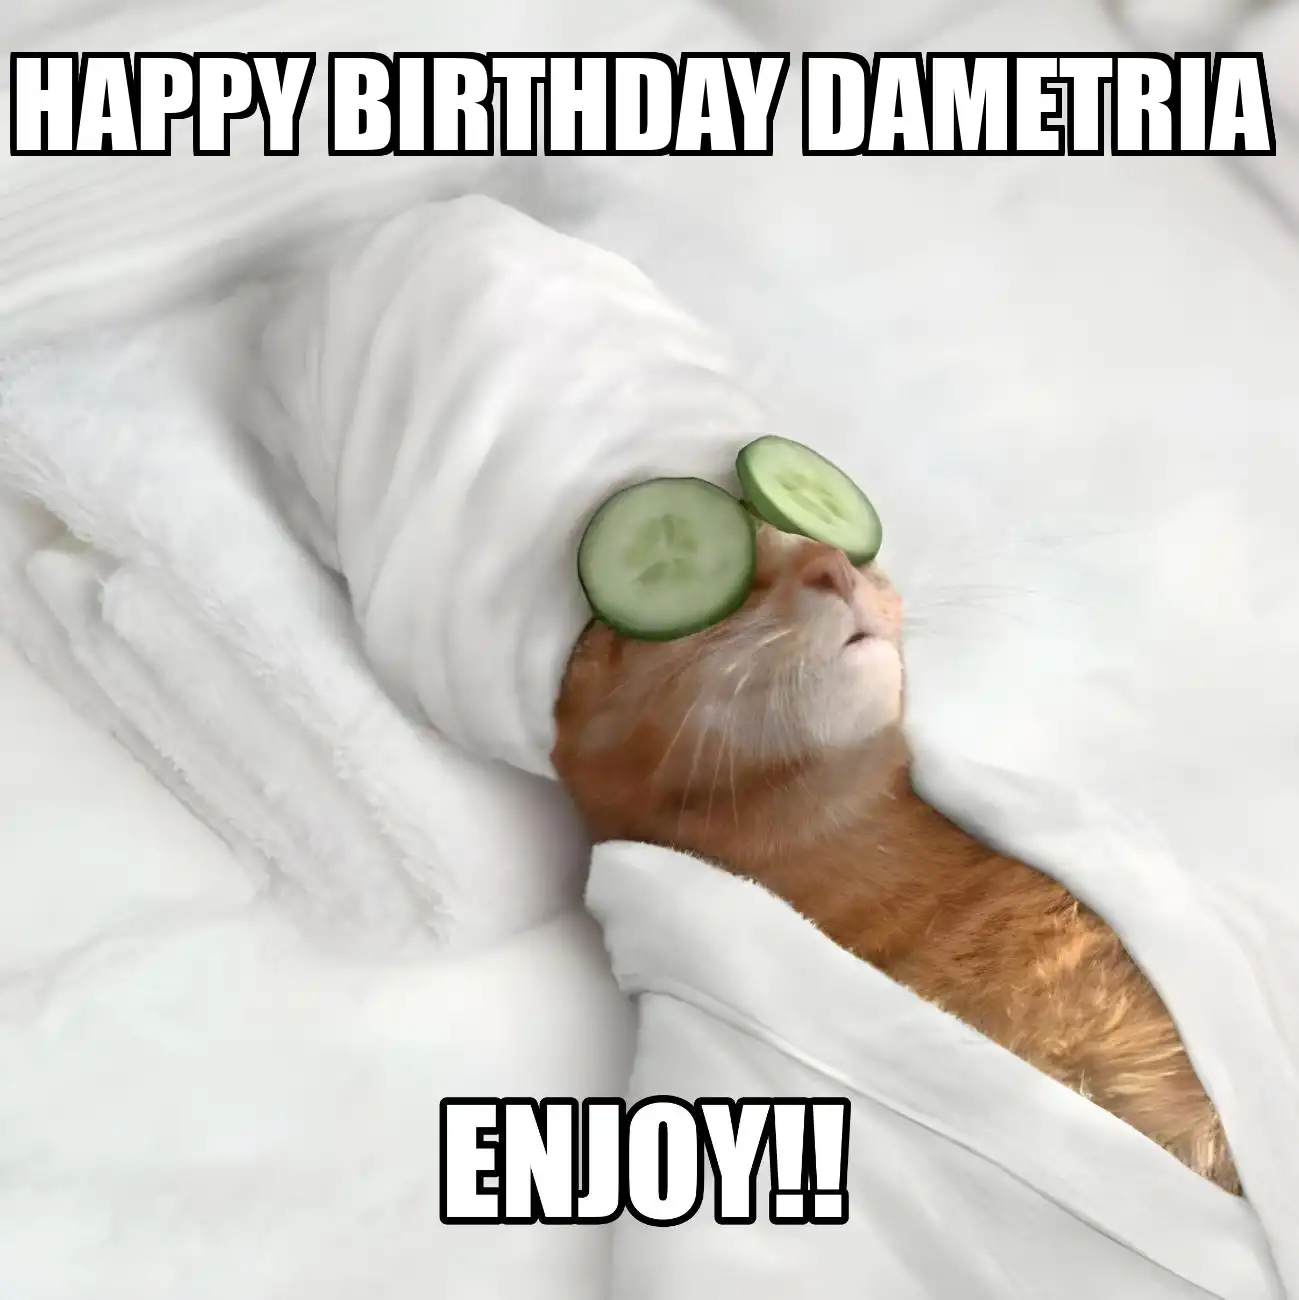 Happy Birthday Dametria Enjoy Cat Meme